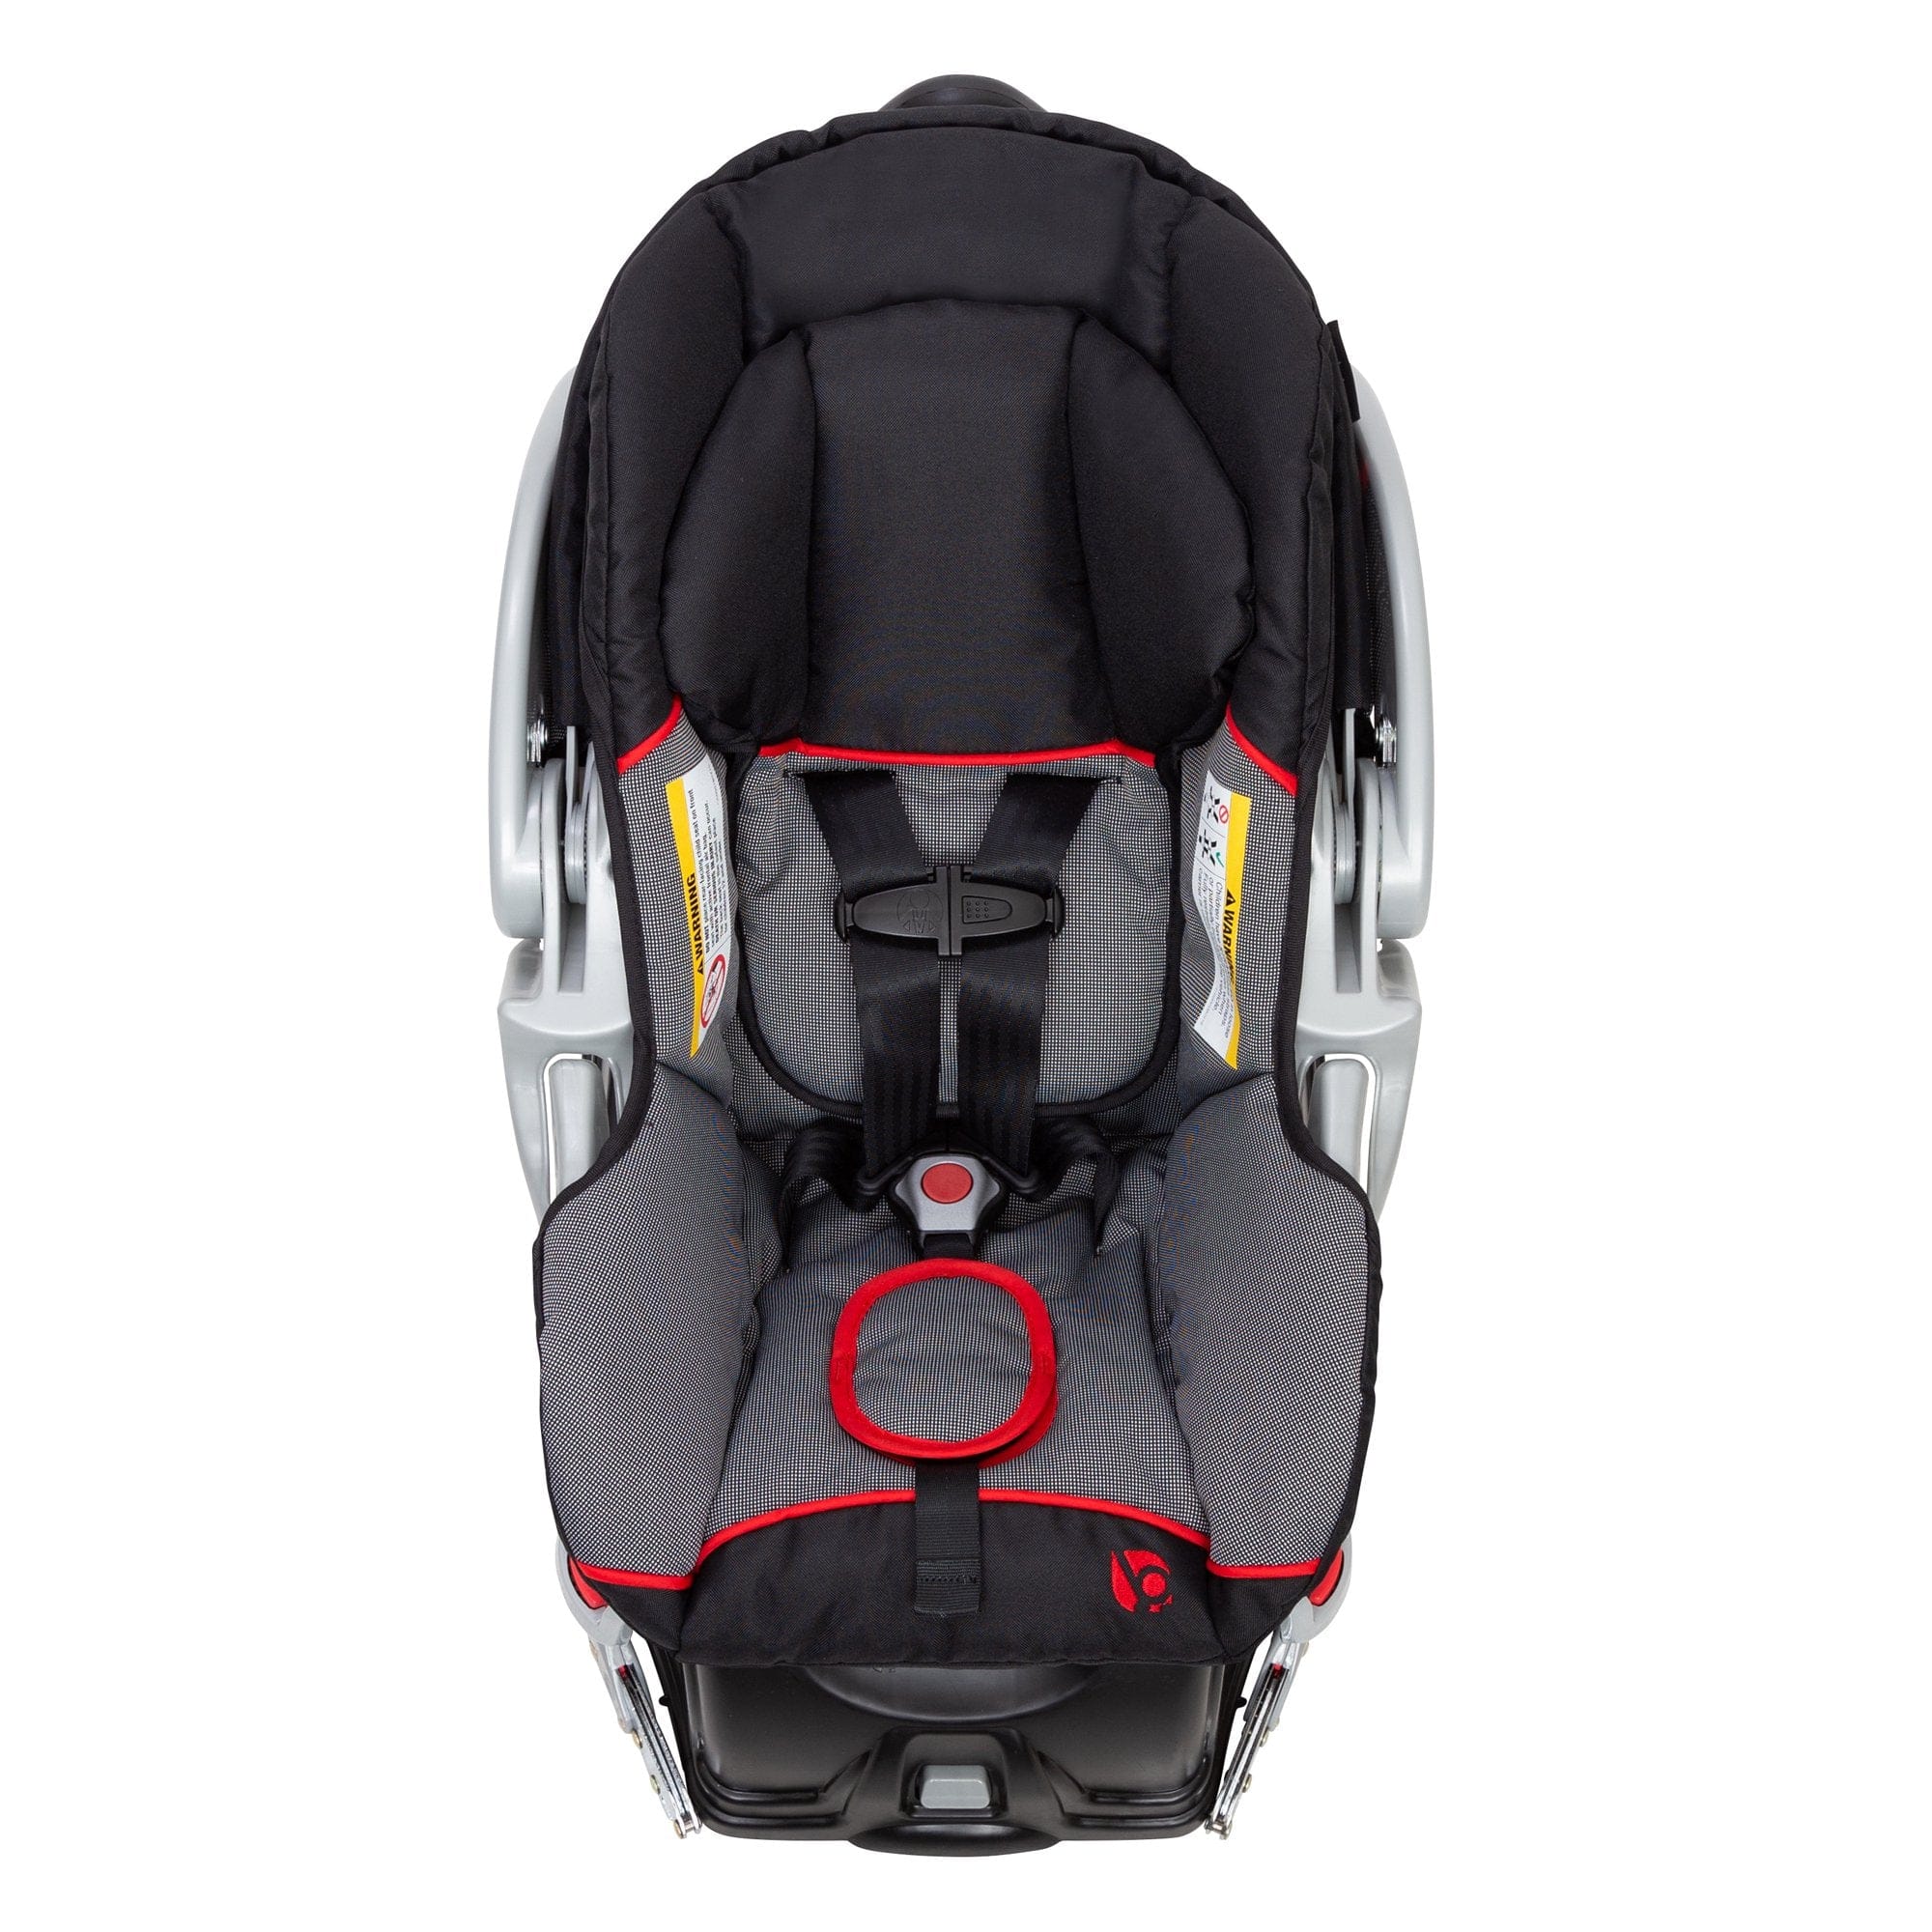 Baby Trend EZ Flex-Loc 30.00 lbs Infant Car Seat, Solid Print Black - 9001401316